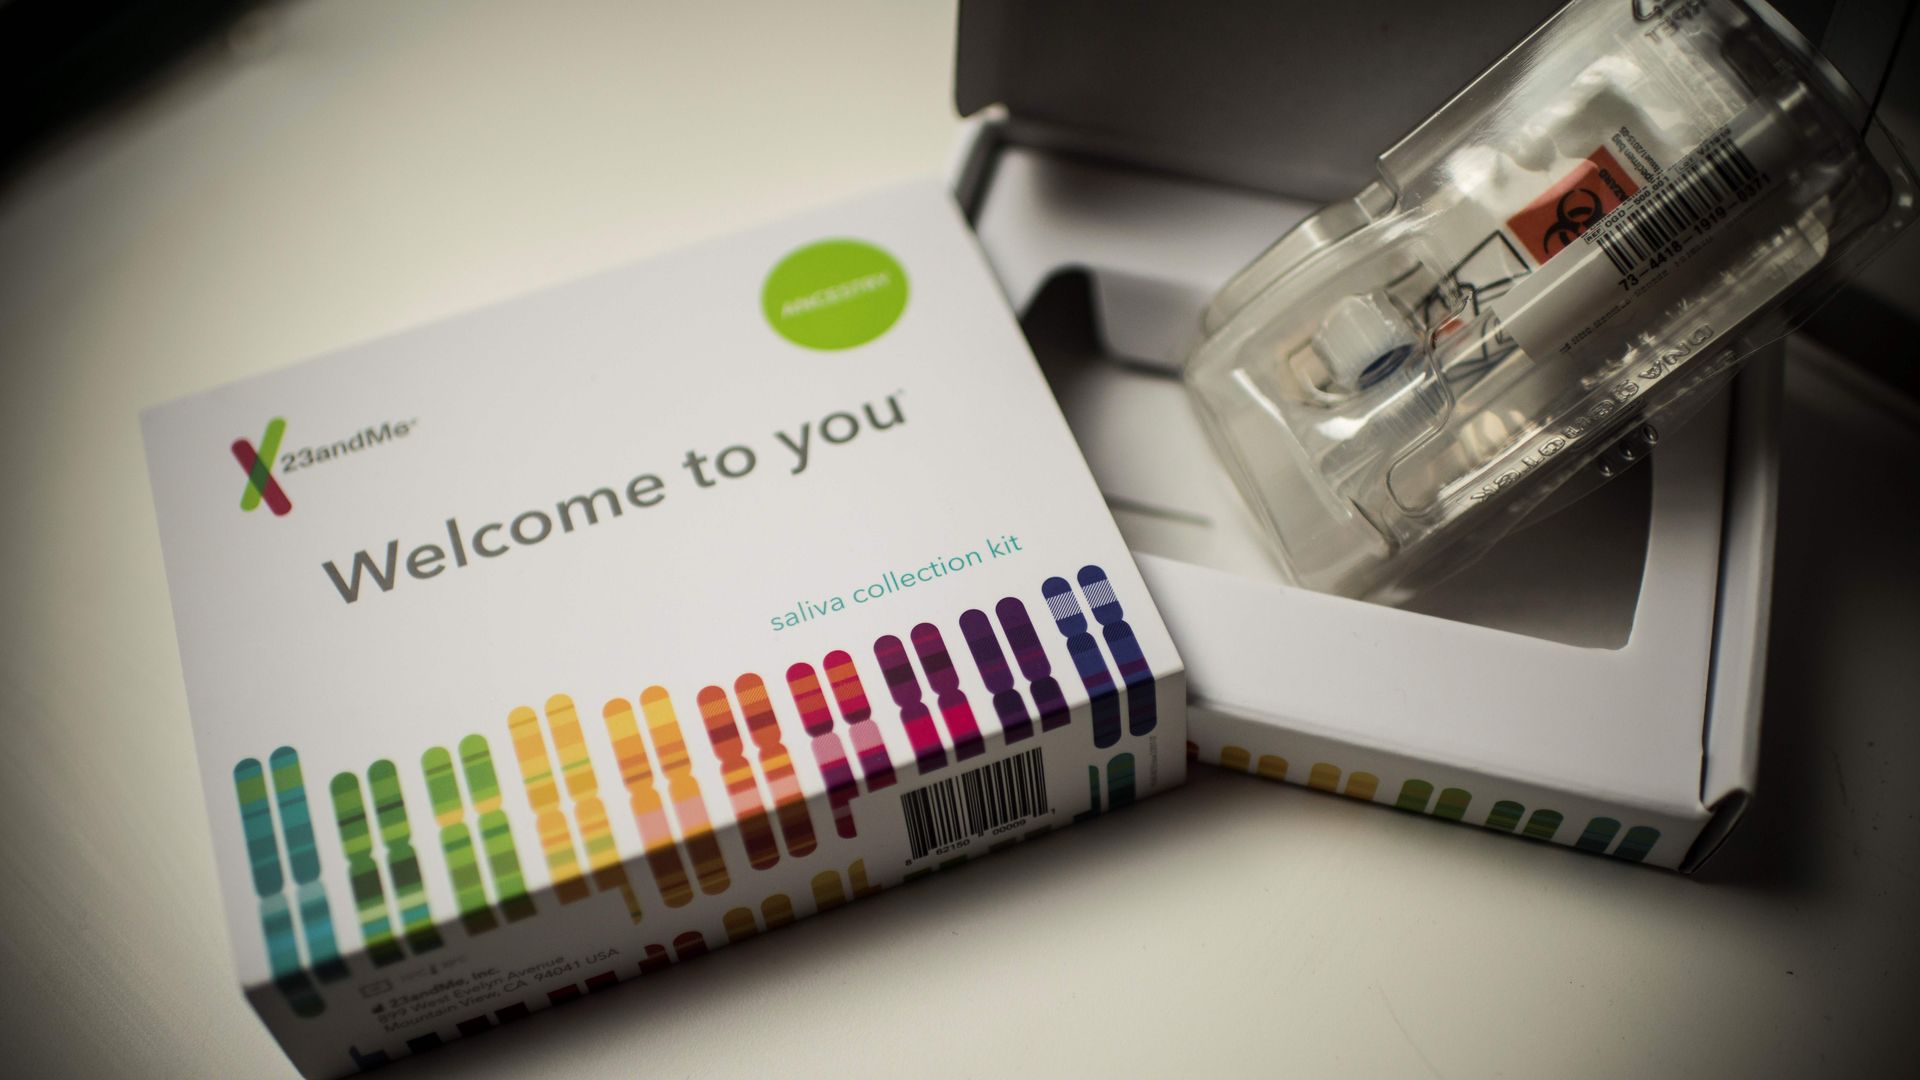 A 23andMe home testing kit